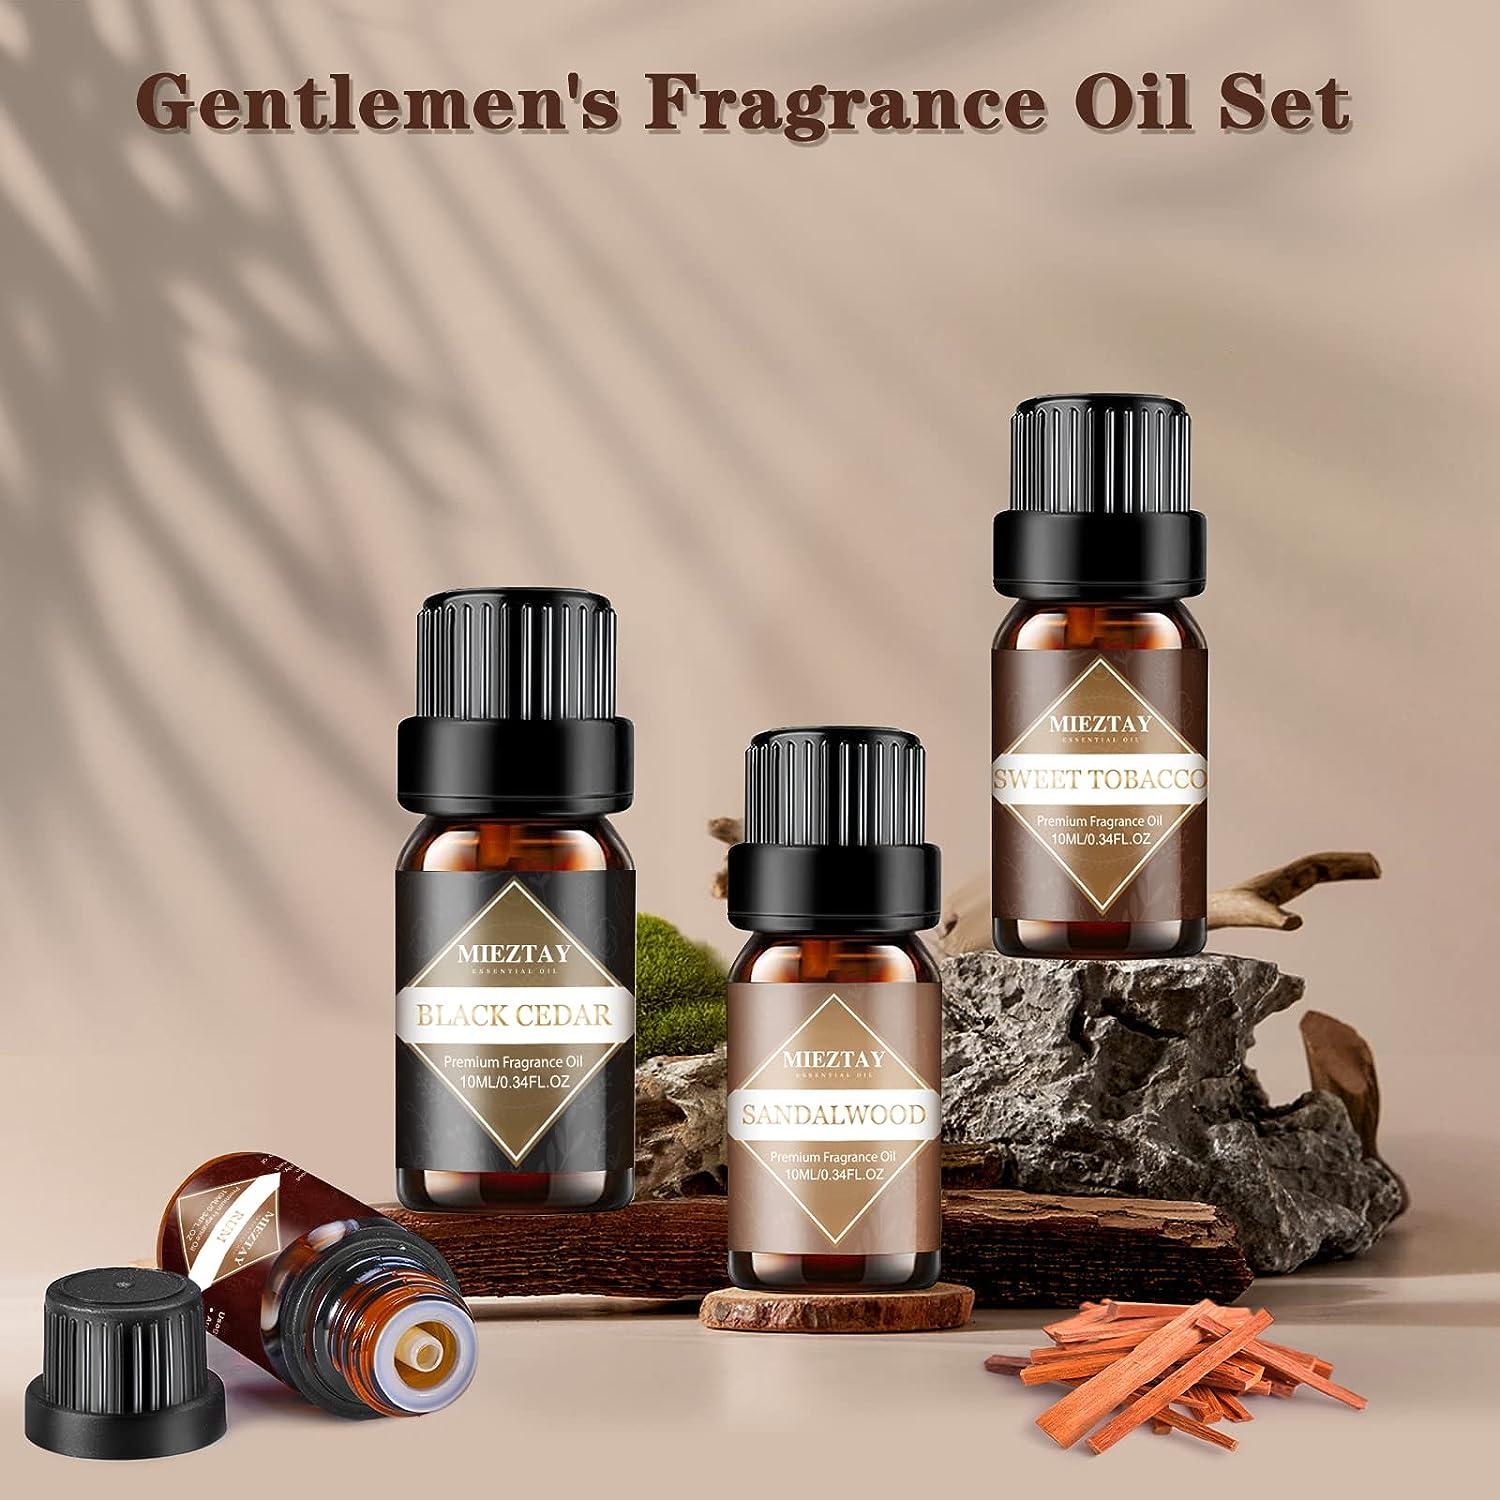 Mens Essential Oils Set - TOP 6 Gentlemen's Fragrance Oil for